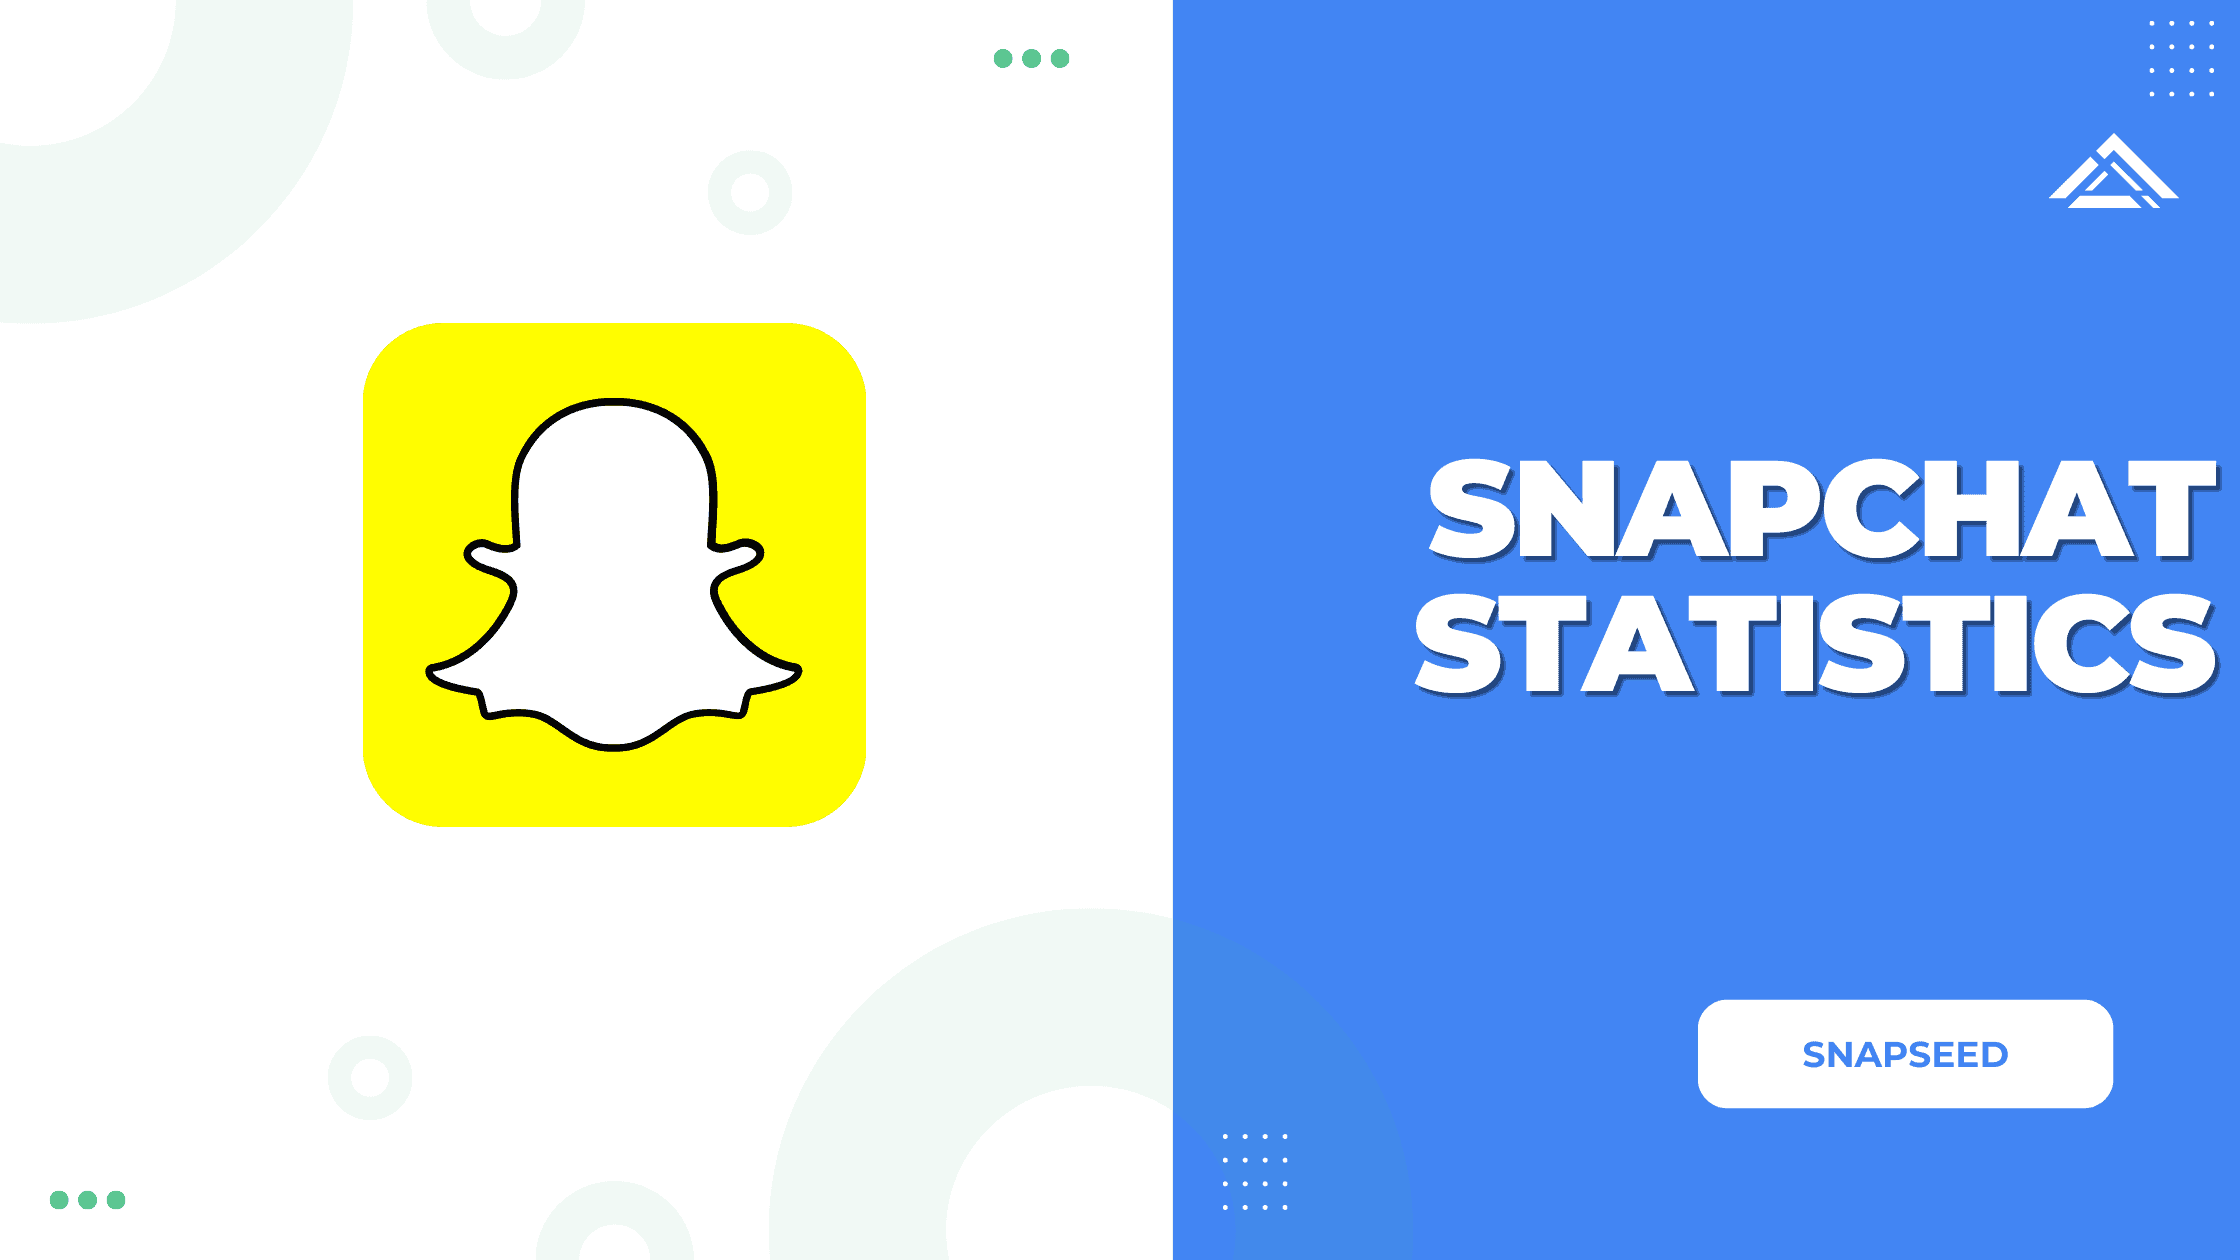 Snapchat Statistics - Snapseed